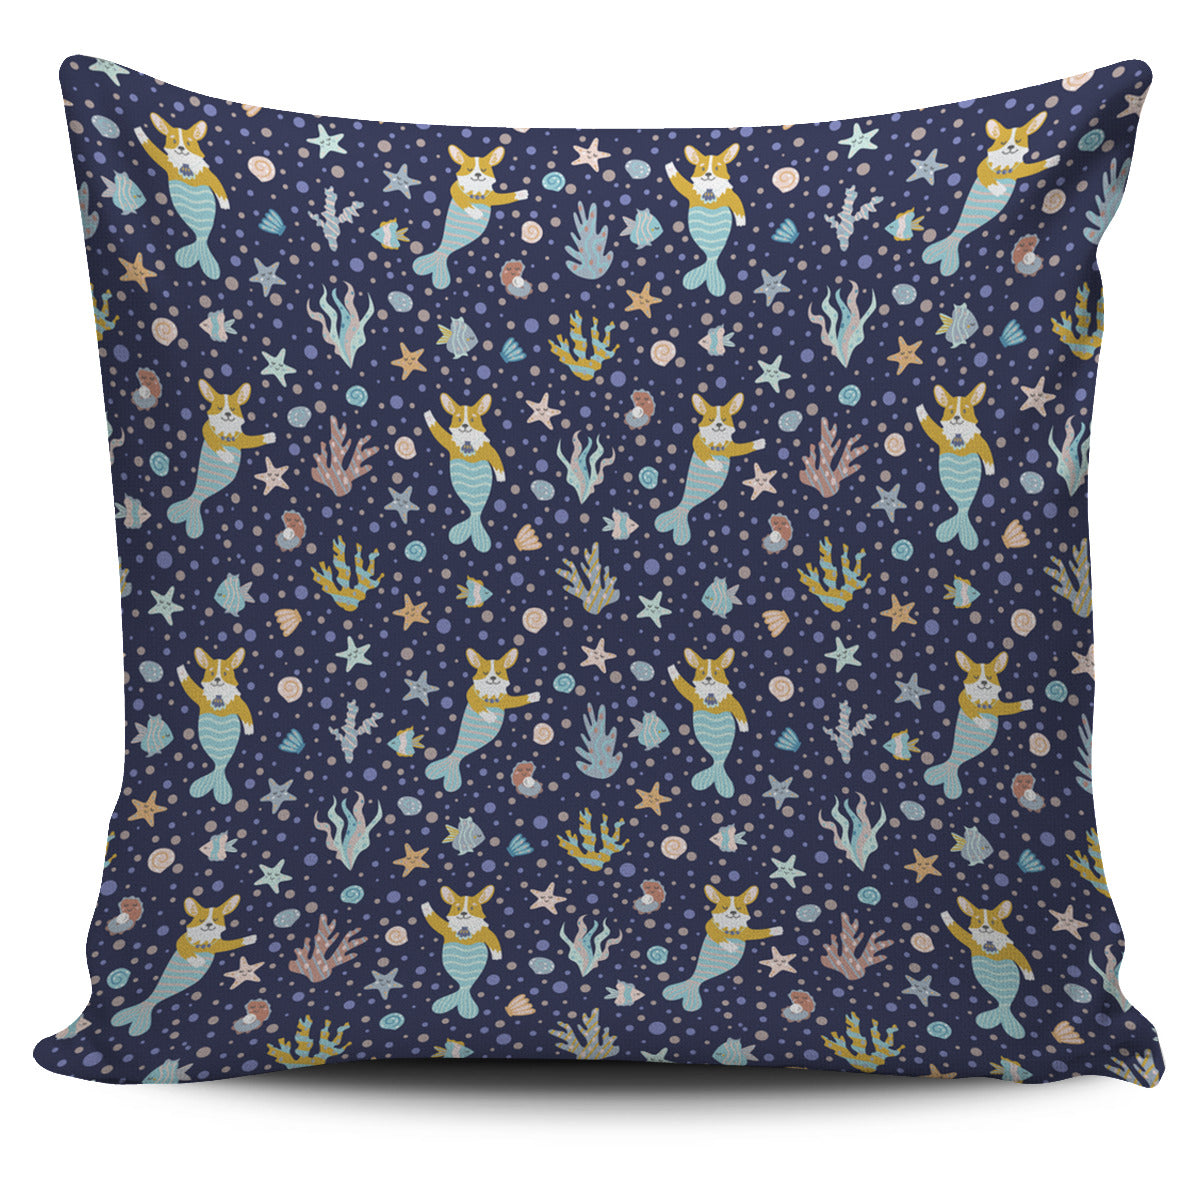 Corgi Mermaid Pillow Cover